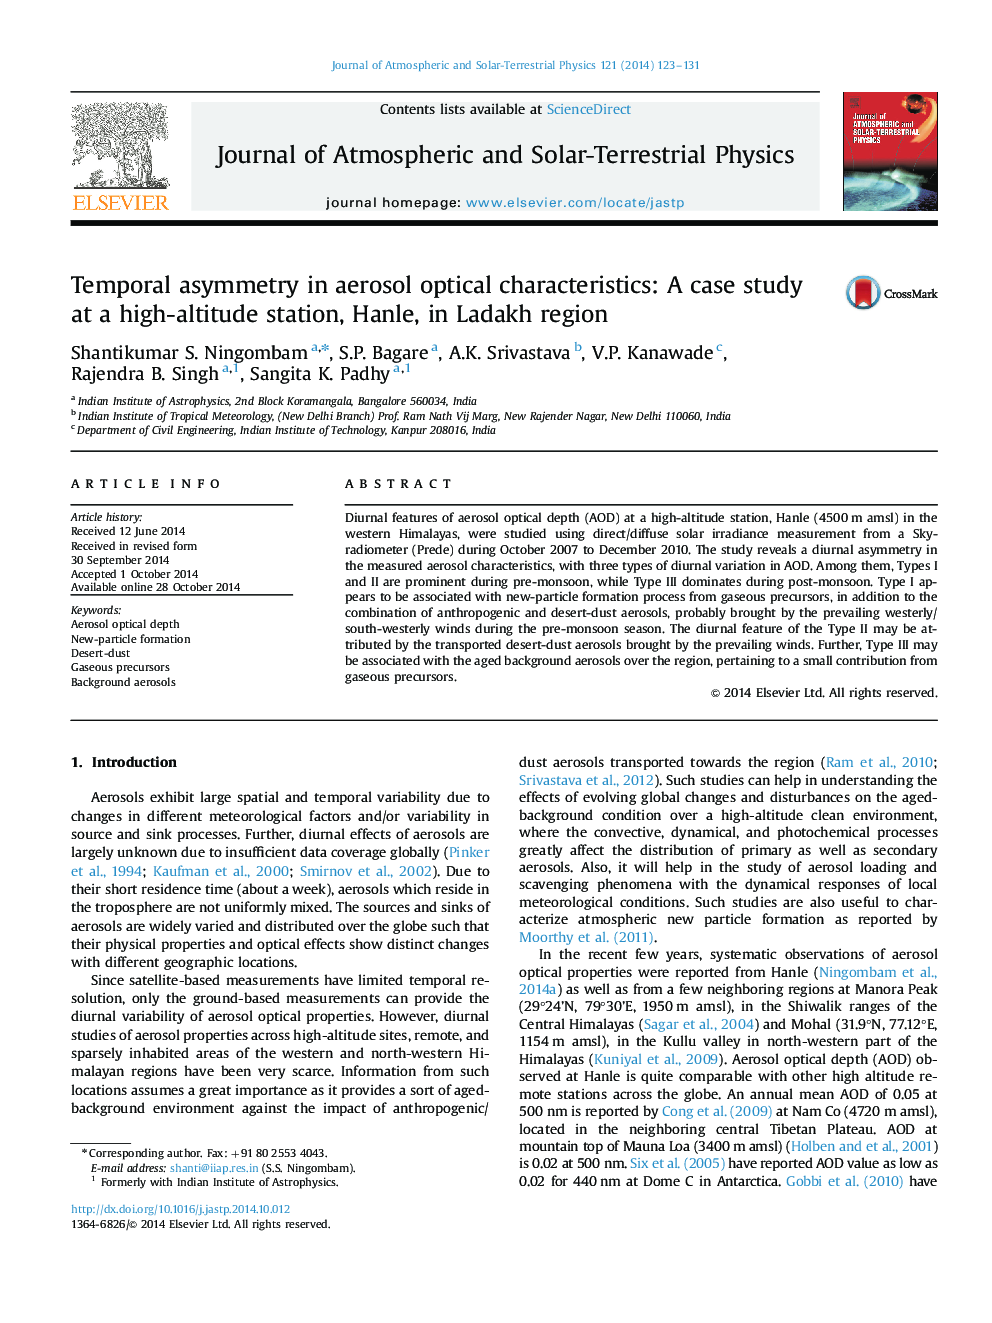 Temporal asymmetry in aerosol optical characteristics: A case study at a high-altitude station, Hanle, in Ladakh region